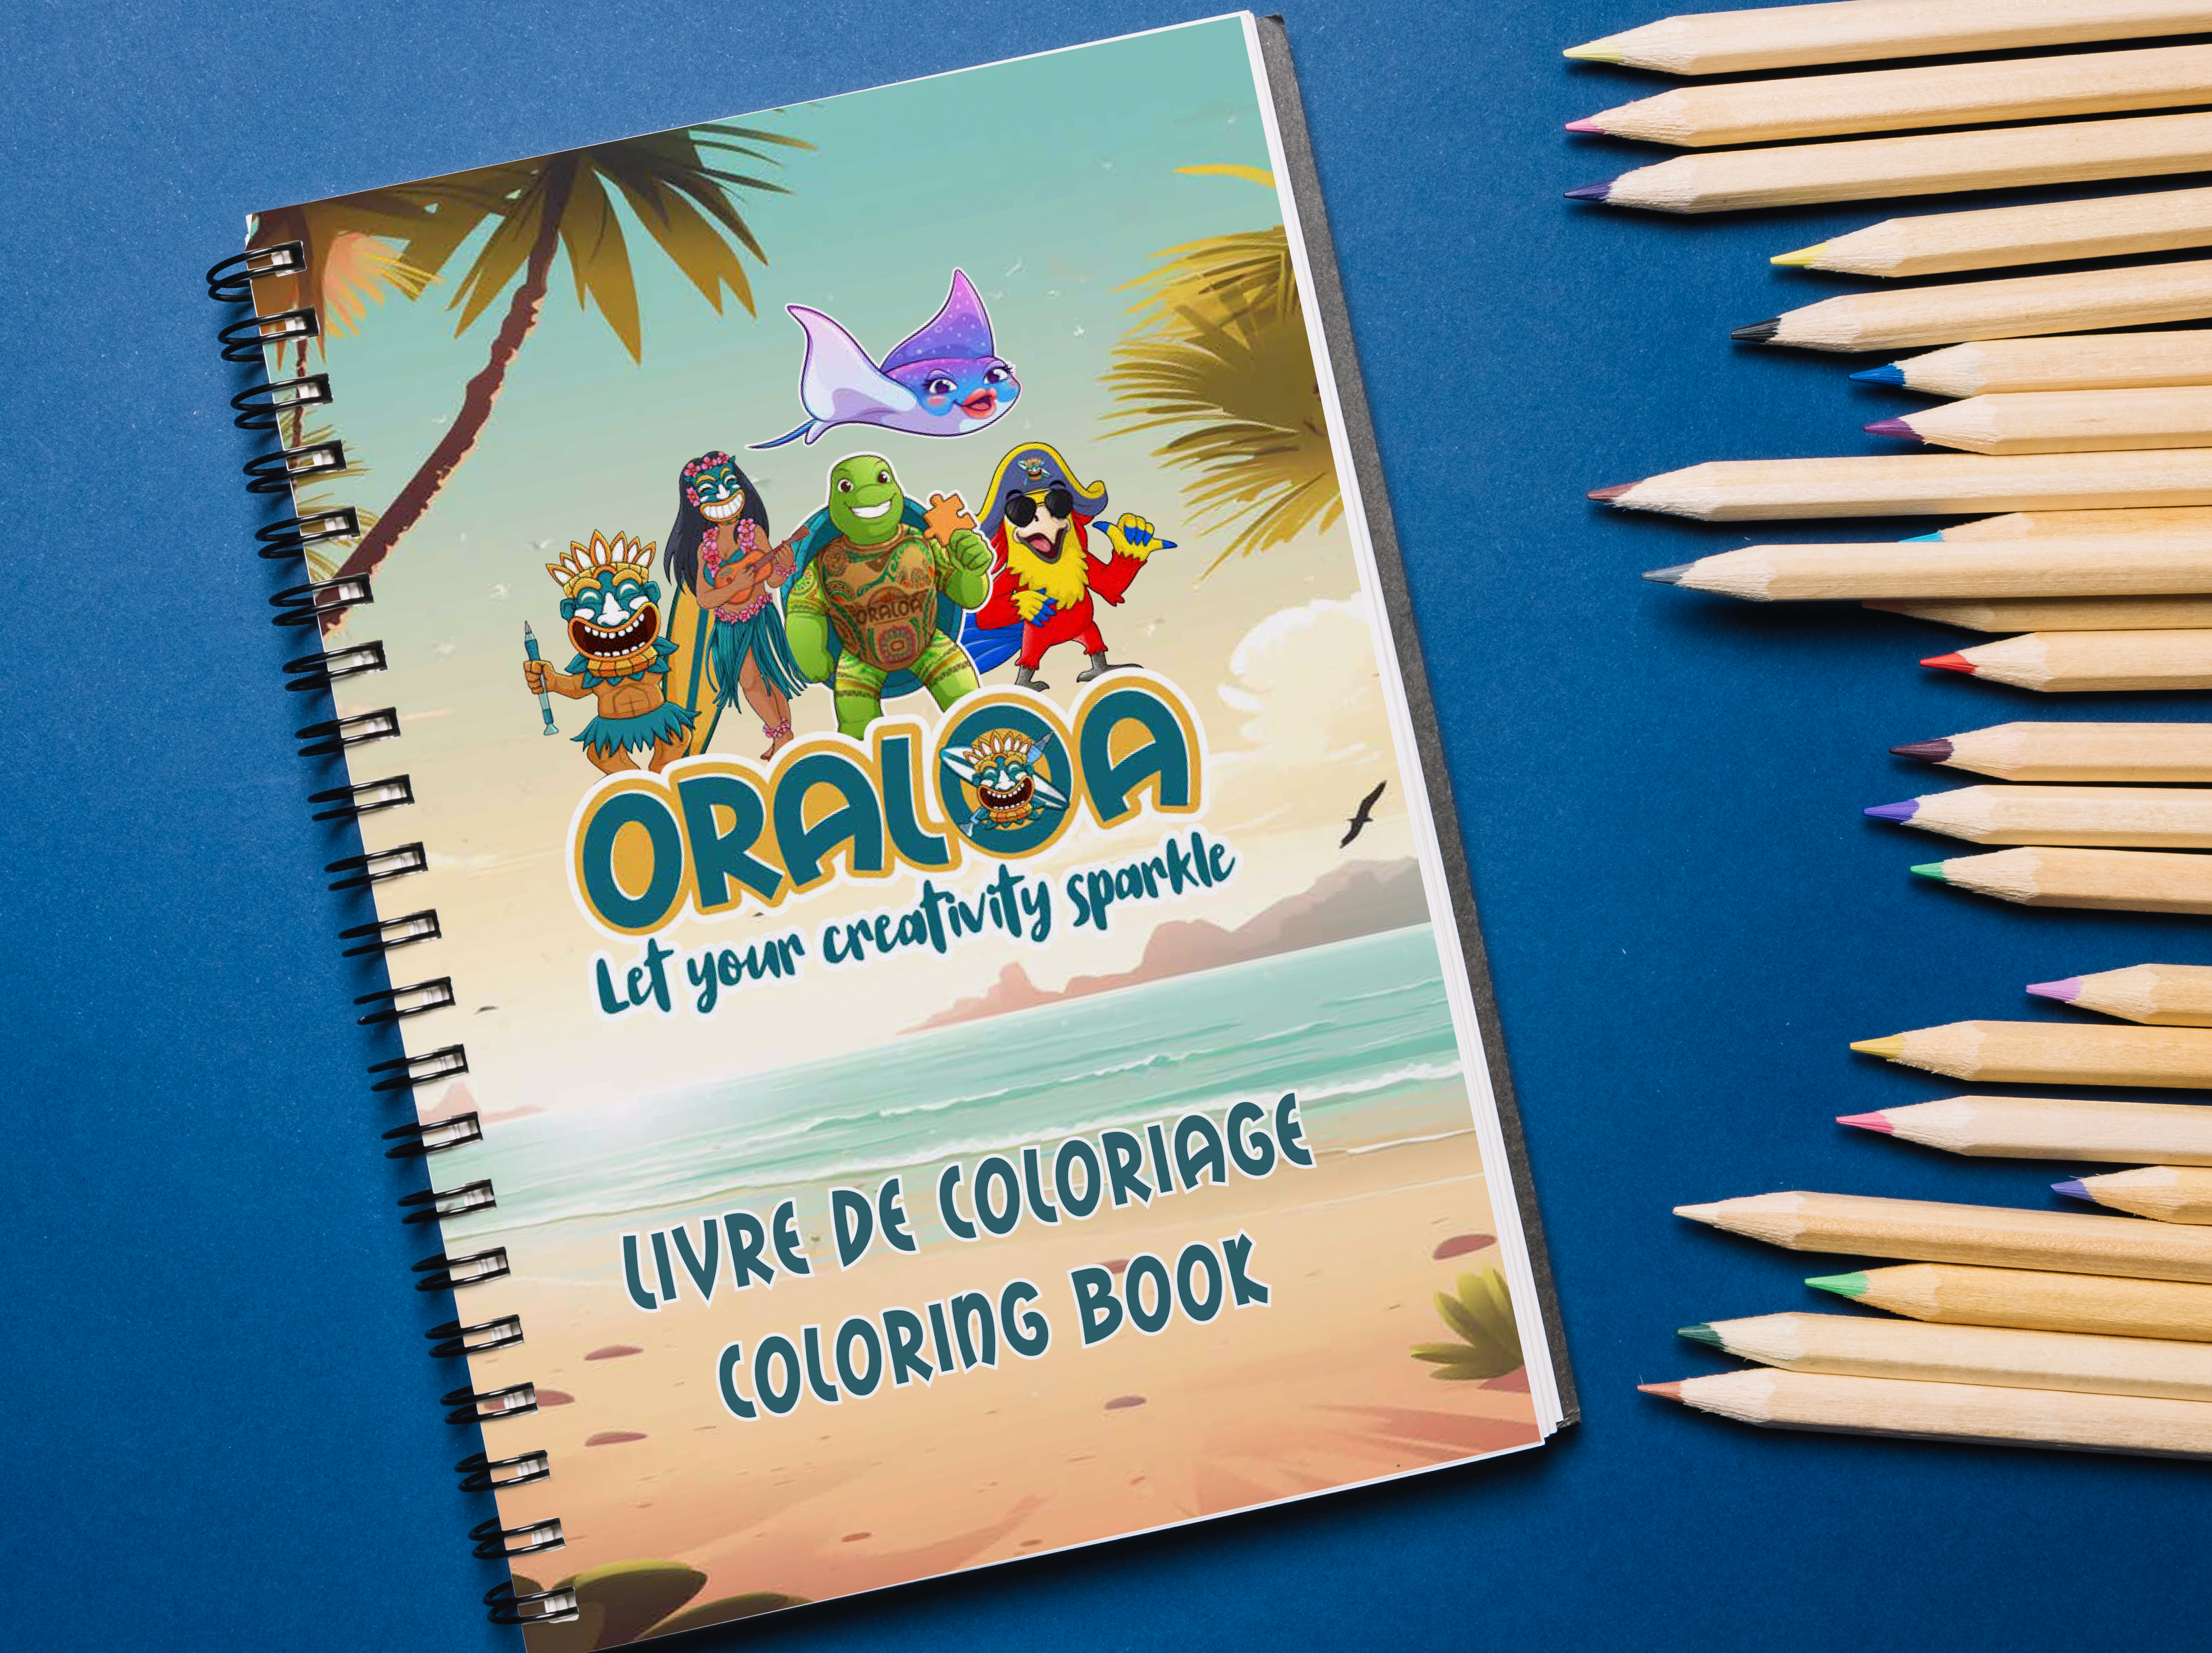 Oraloa and Artists Coloring Book